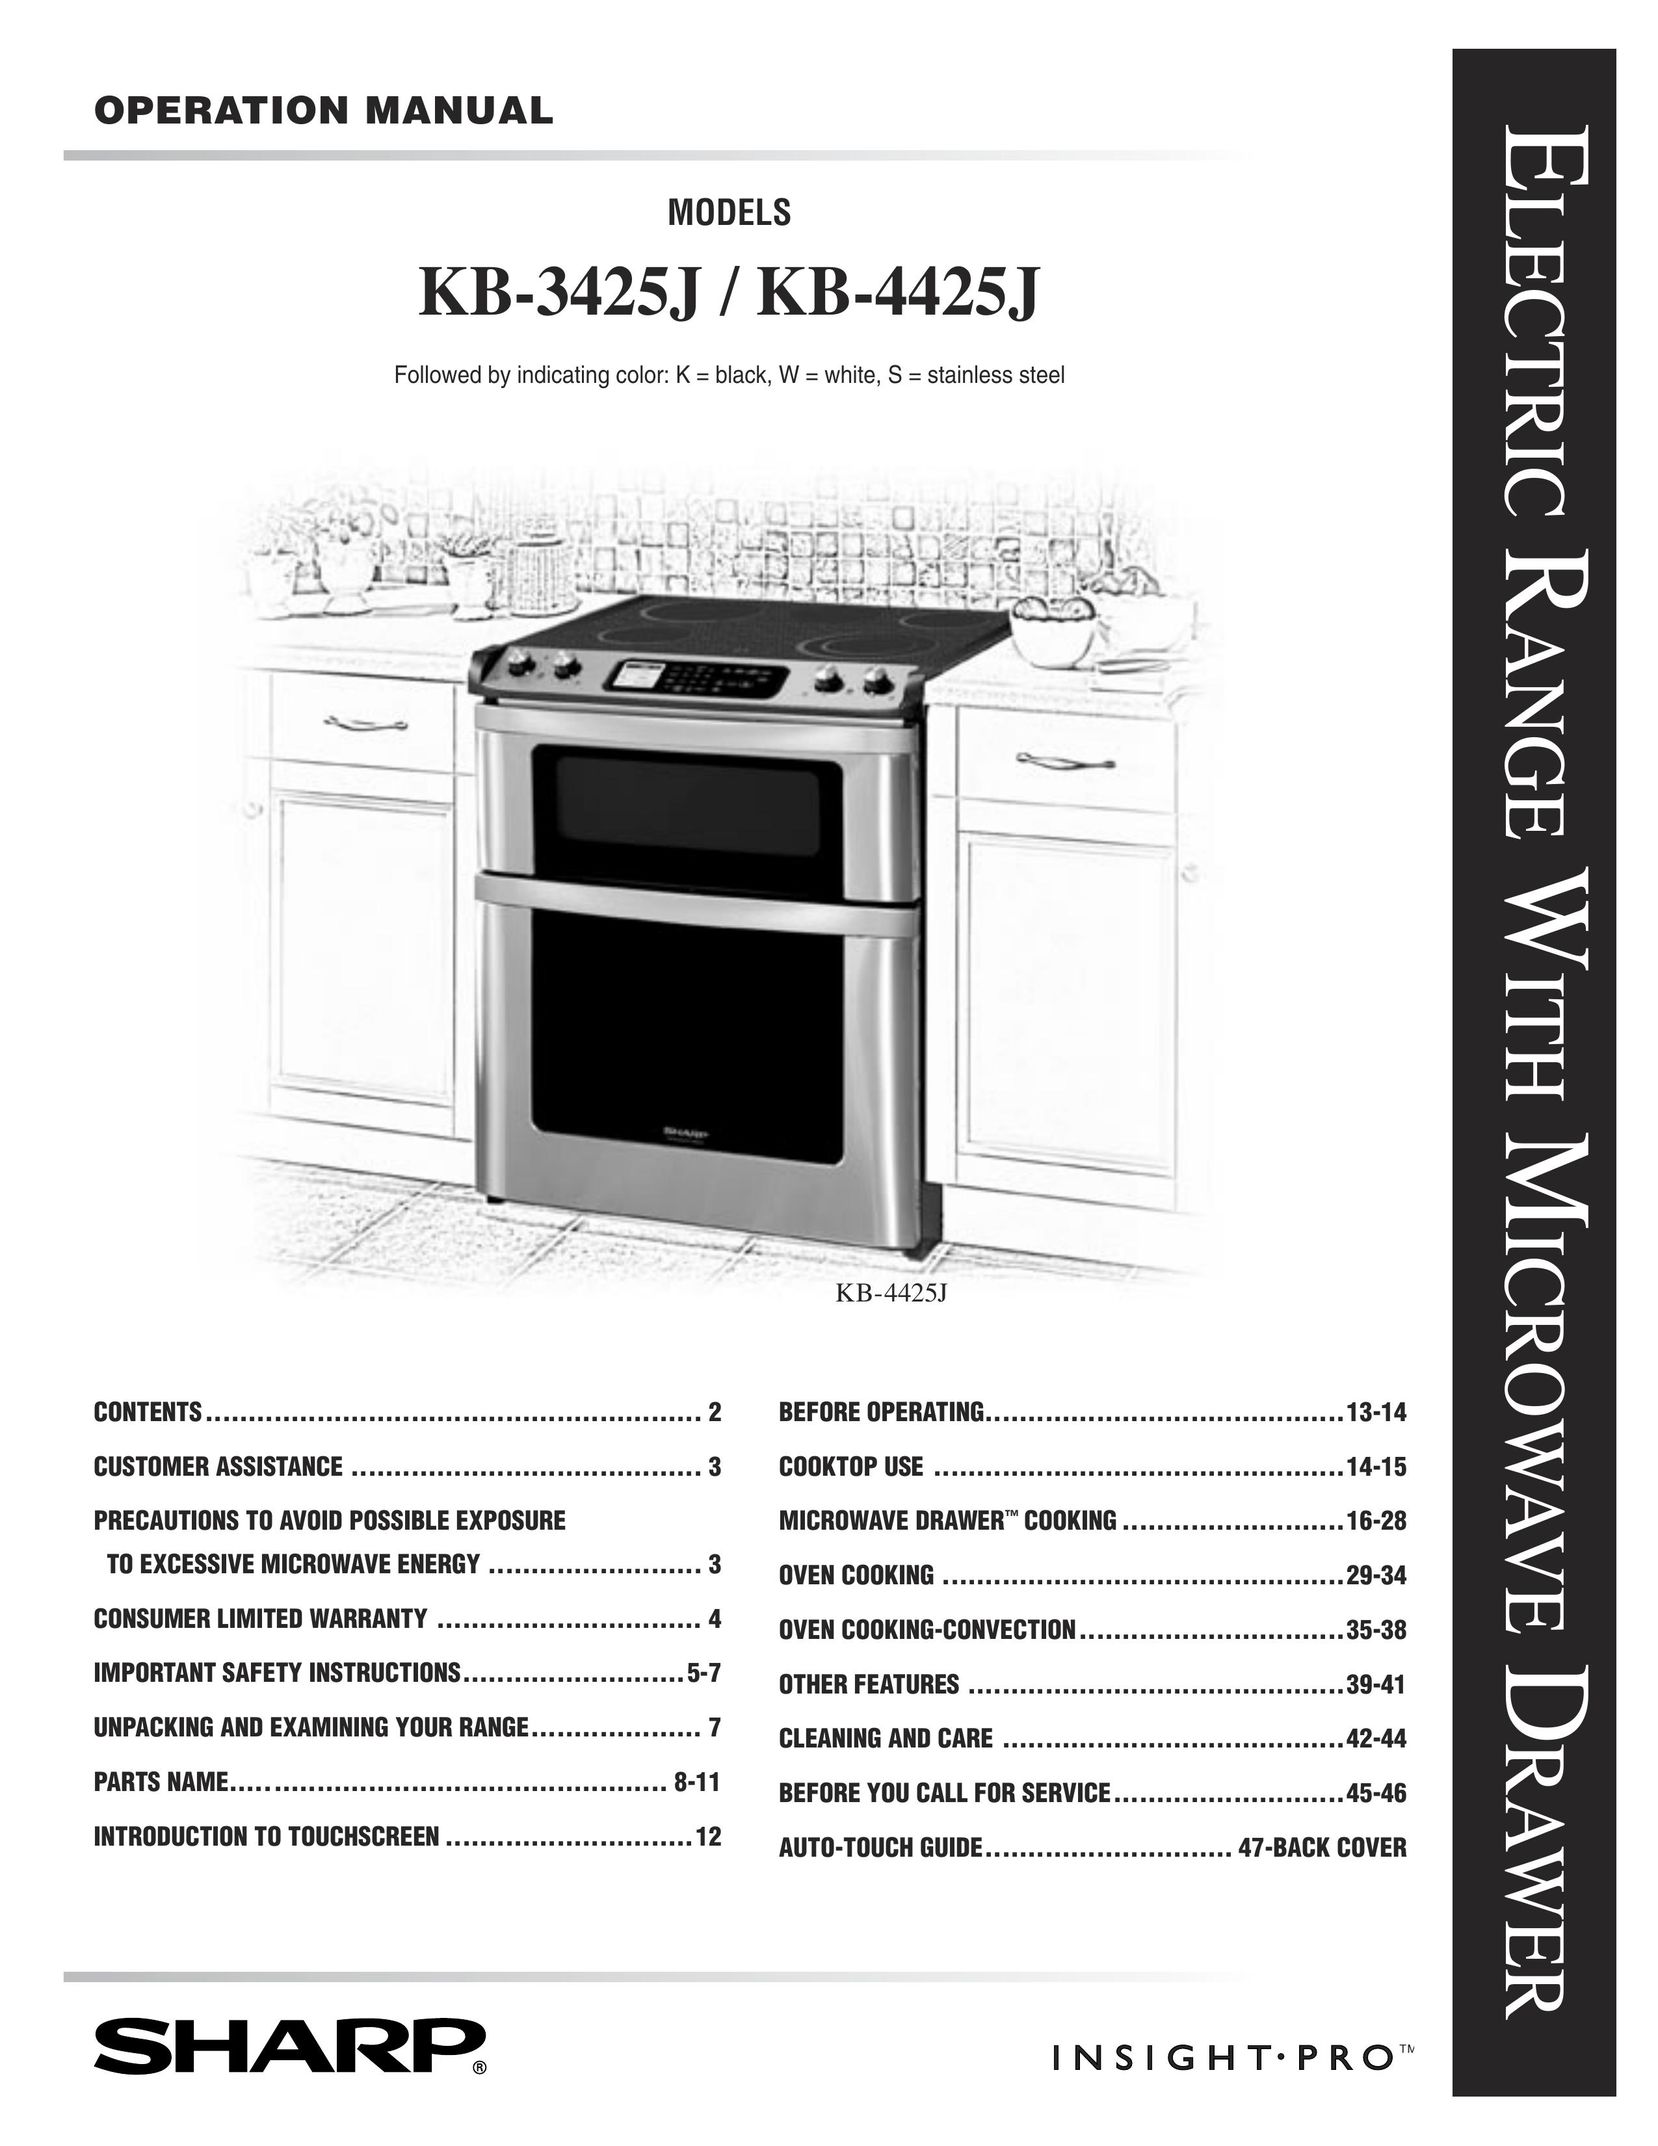 Sharp KB-4425J Range User Manual